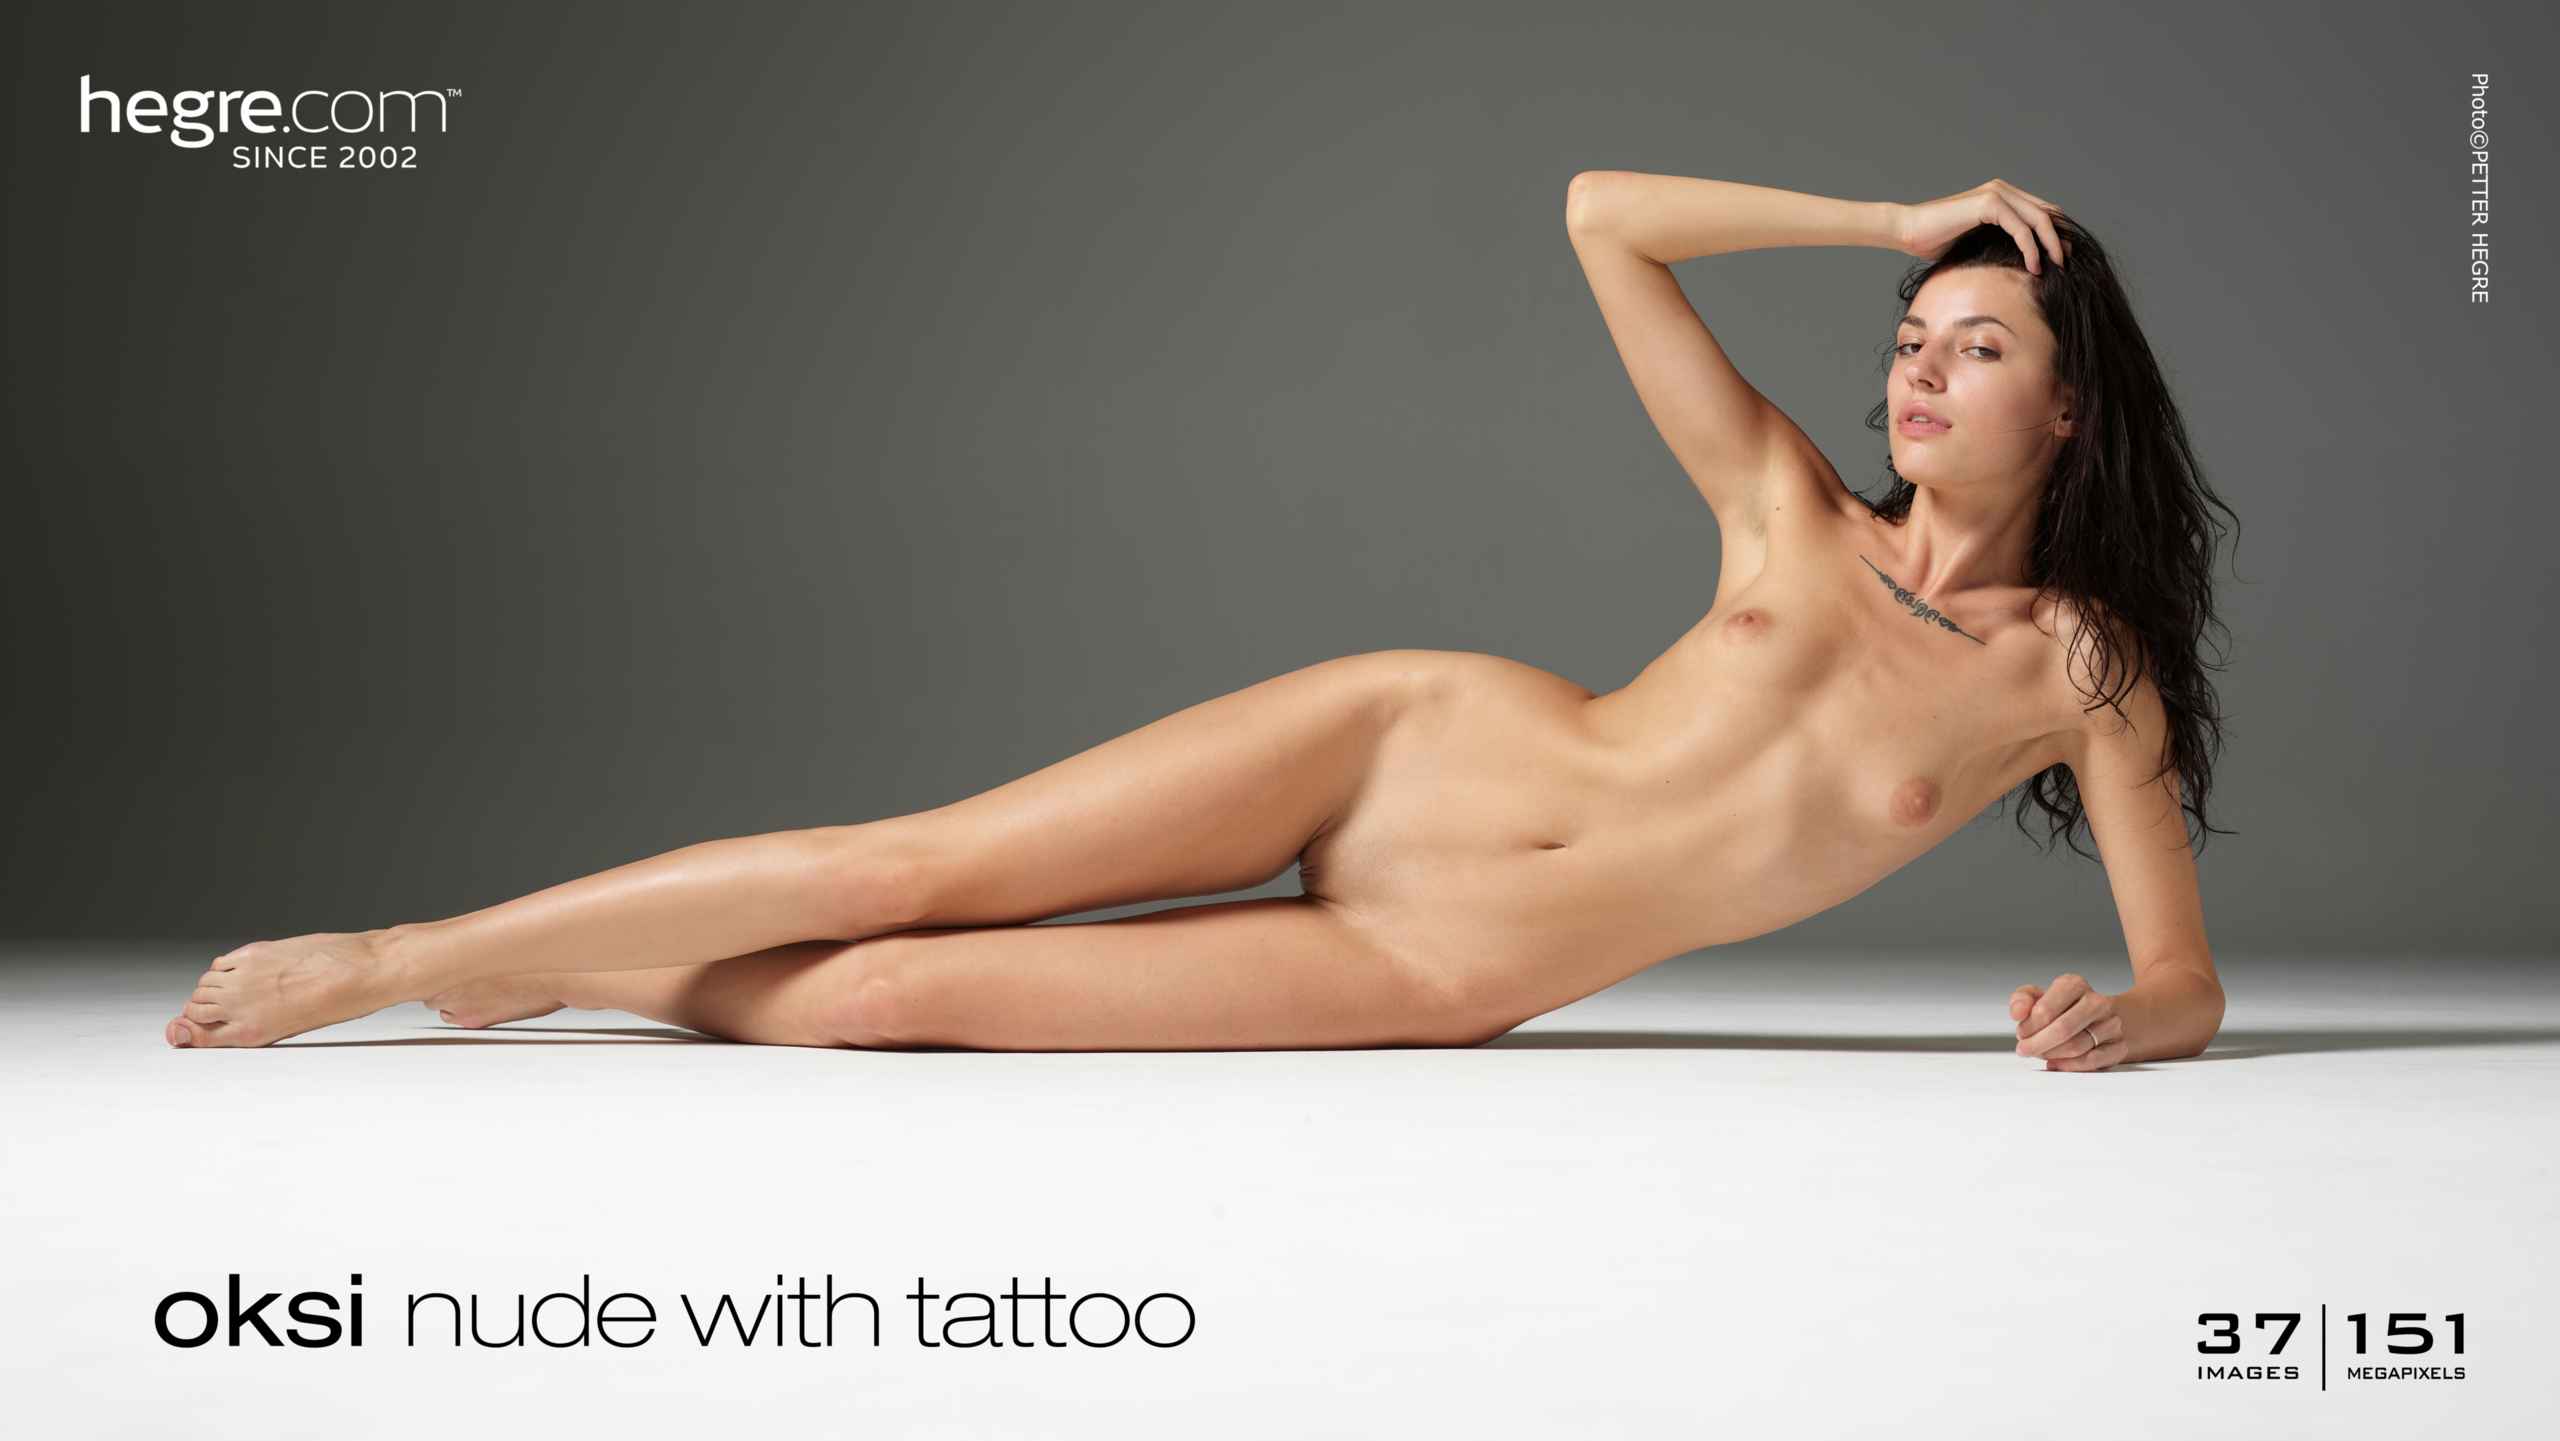 hegre.com oksi nude with tattoo big